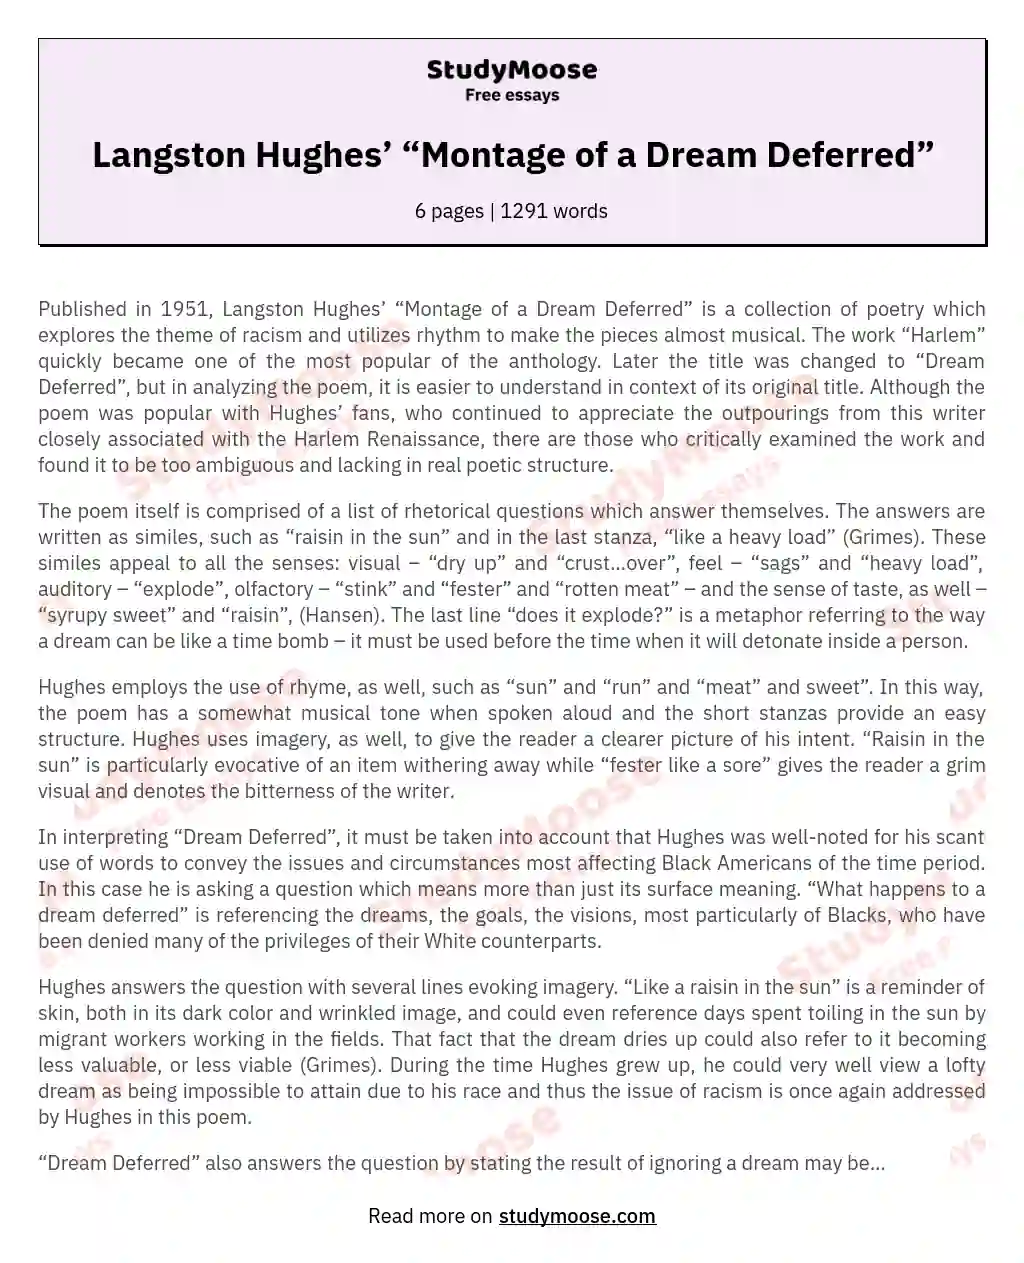 Langston Hughes’ “Montage of a Dream Deferred” essay